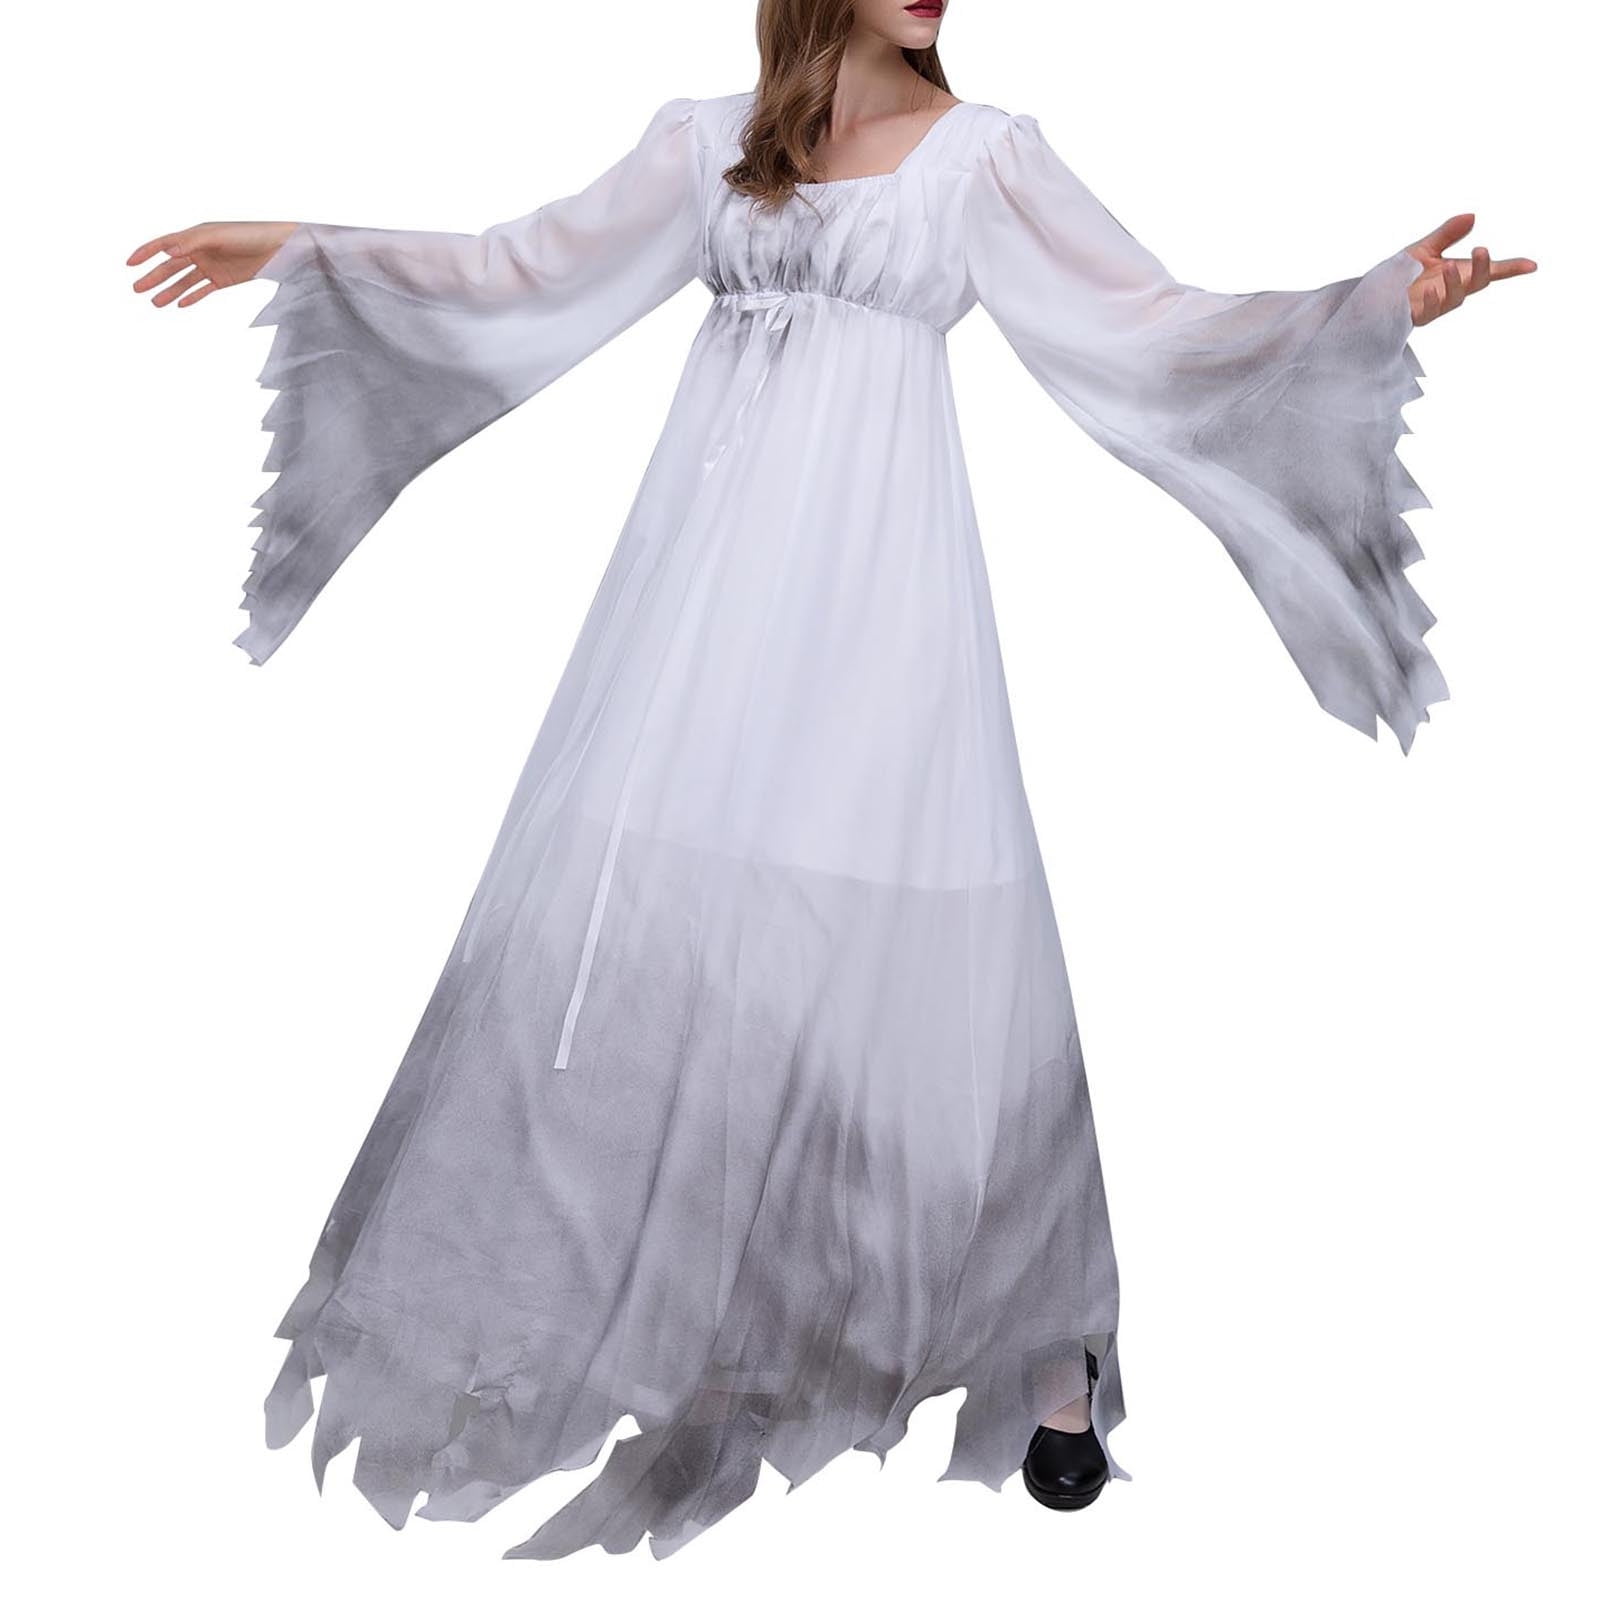 Halloween Dress for Women Gossamer Ghost Costume Gothic Victorian White ...